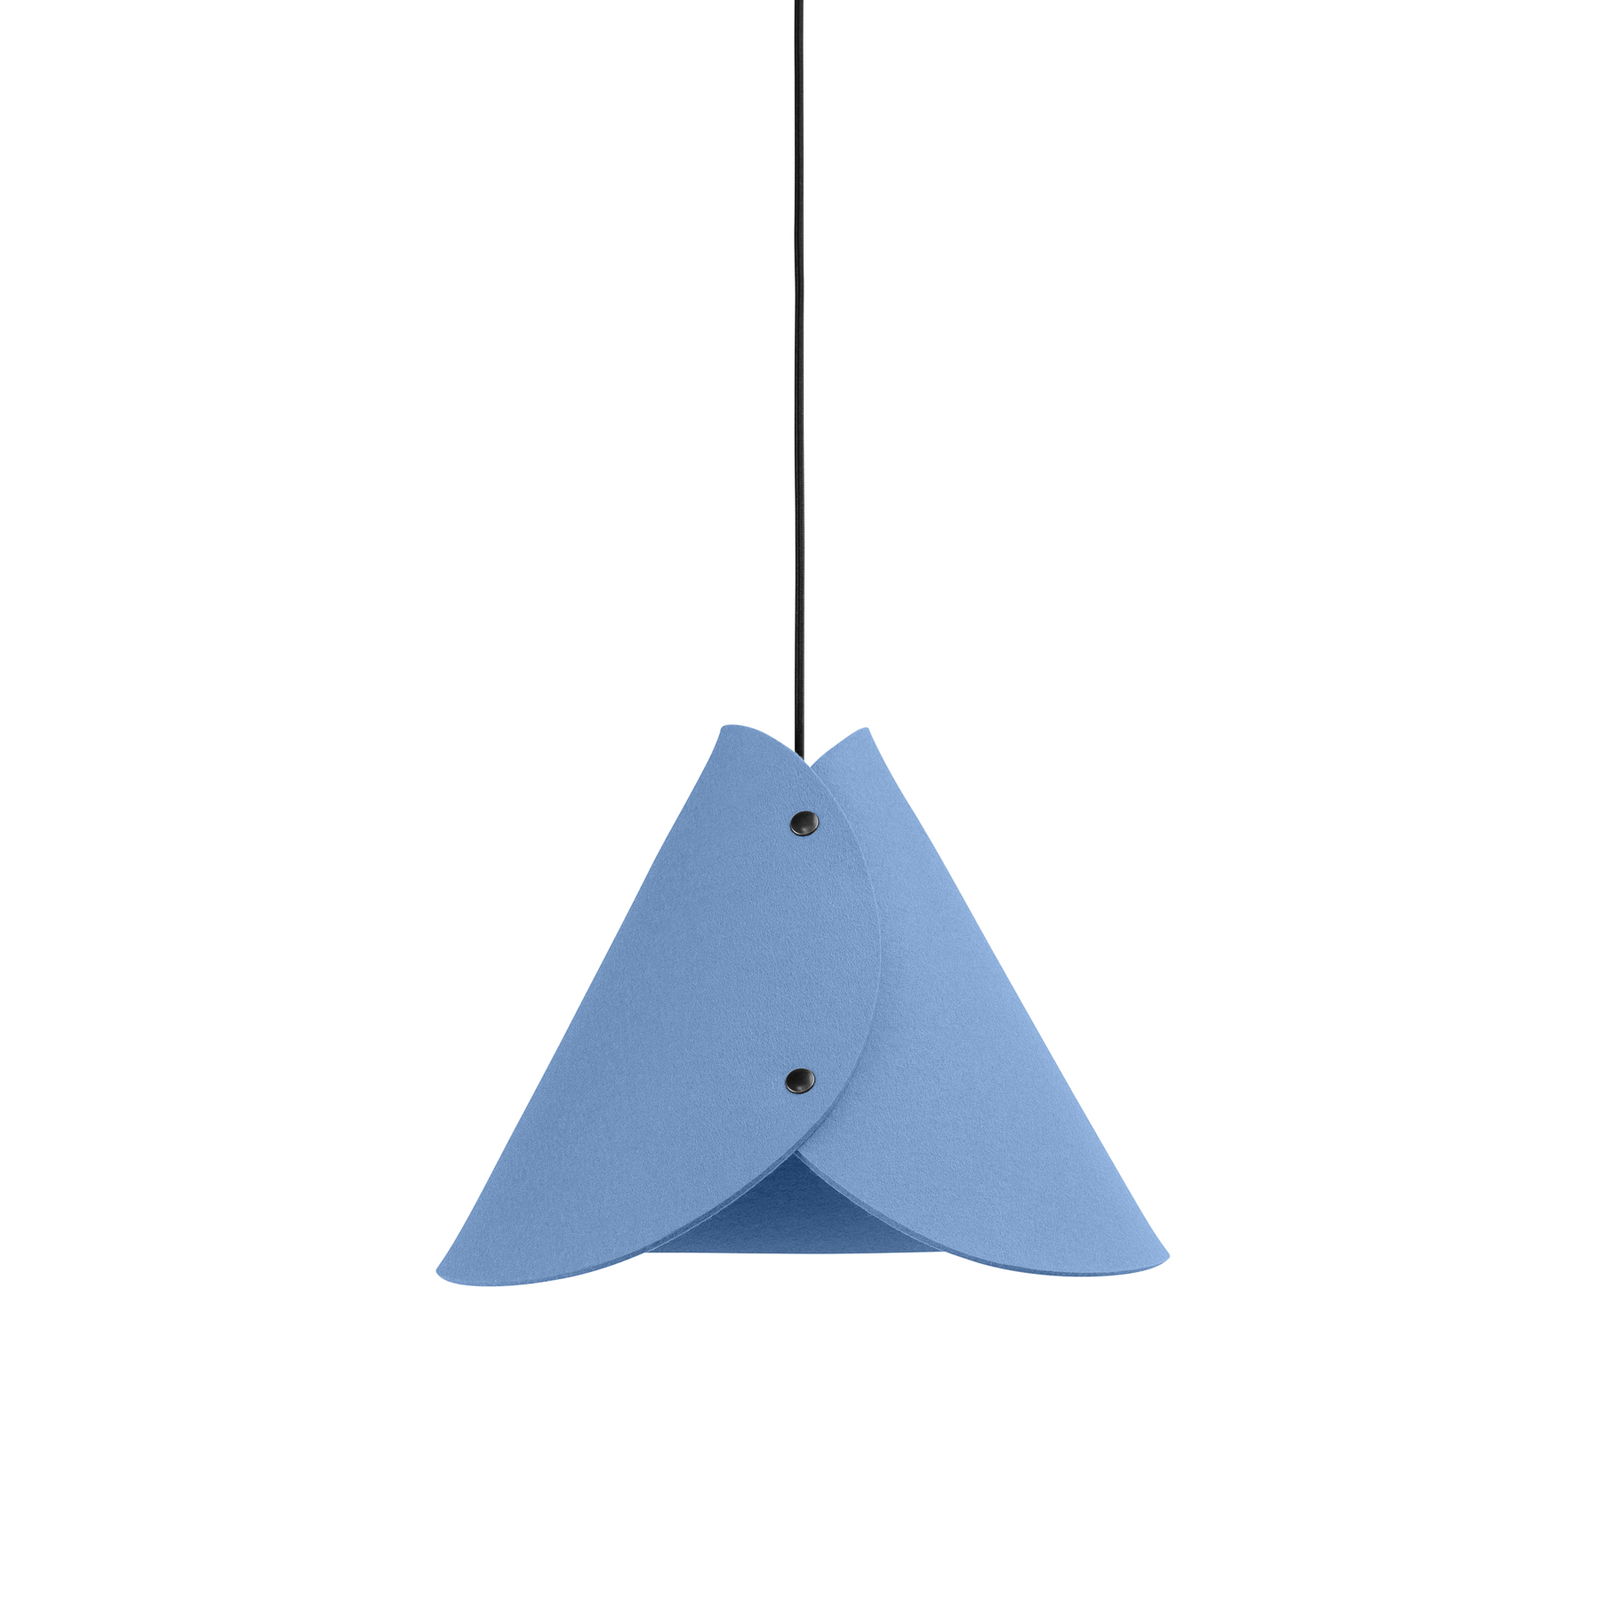 ALMUT 0314 pendant light, conical 1-bulb blue